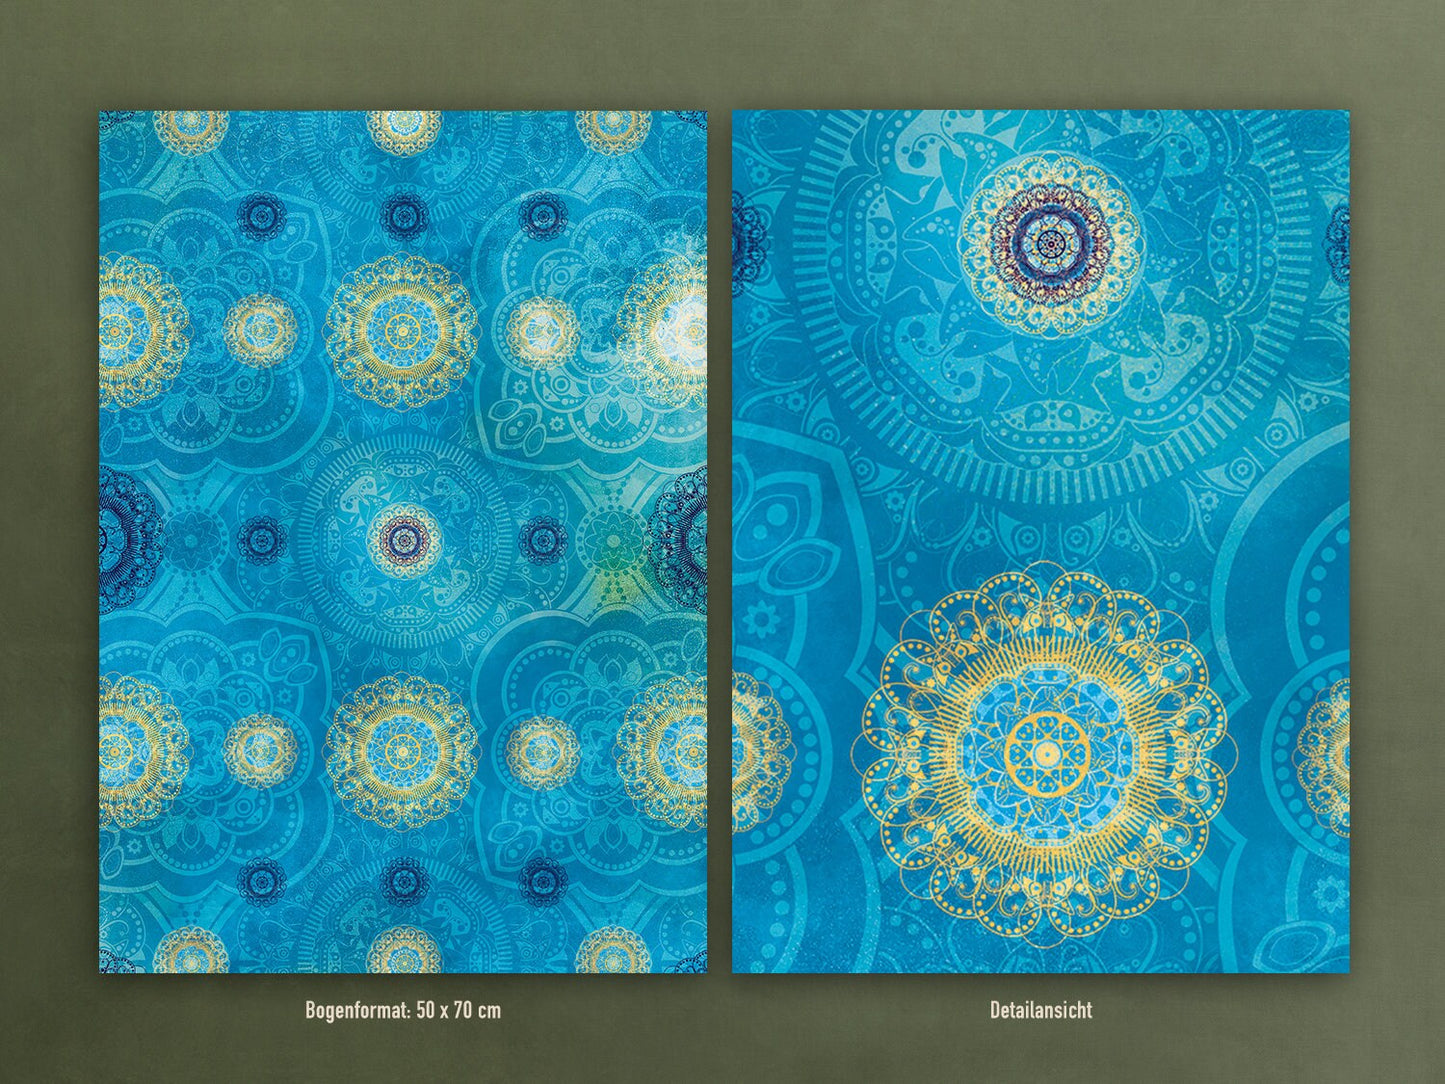 Geschenkpapier Set, Indien: 10 Bögen mit 5 Motiven, 50 x 70 cm, Mandal, Muster, Gold, Henna, türkis, Boho, verpacken